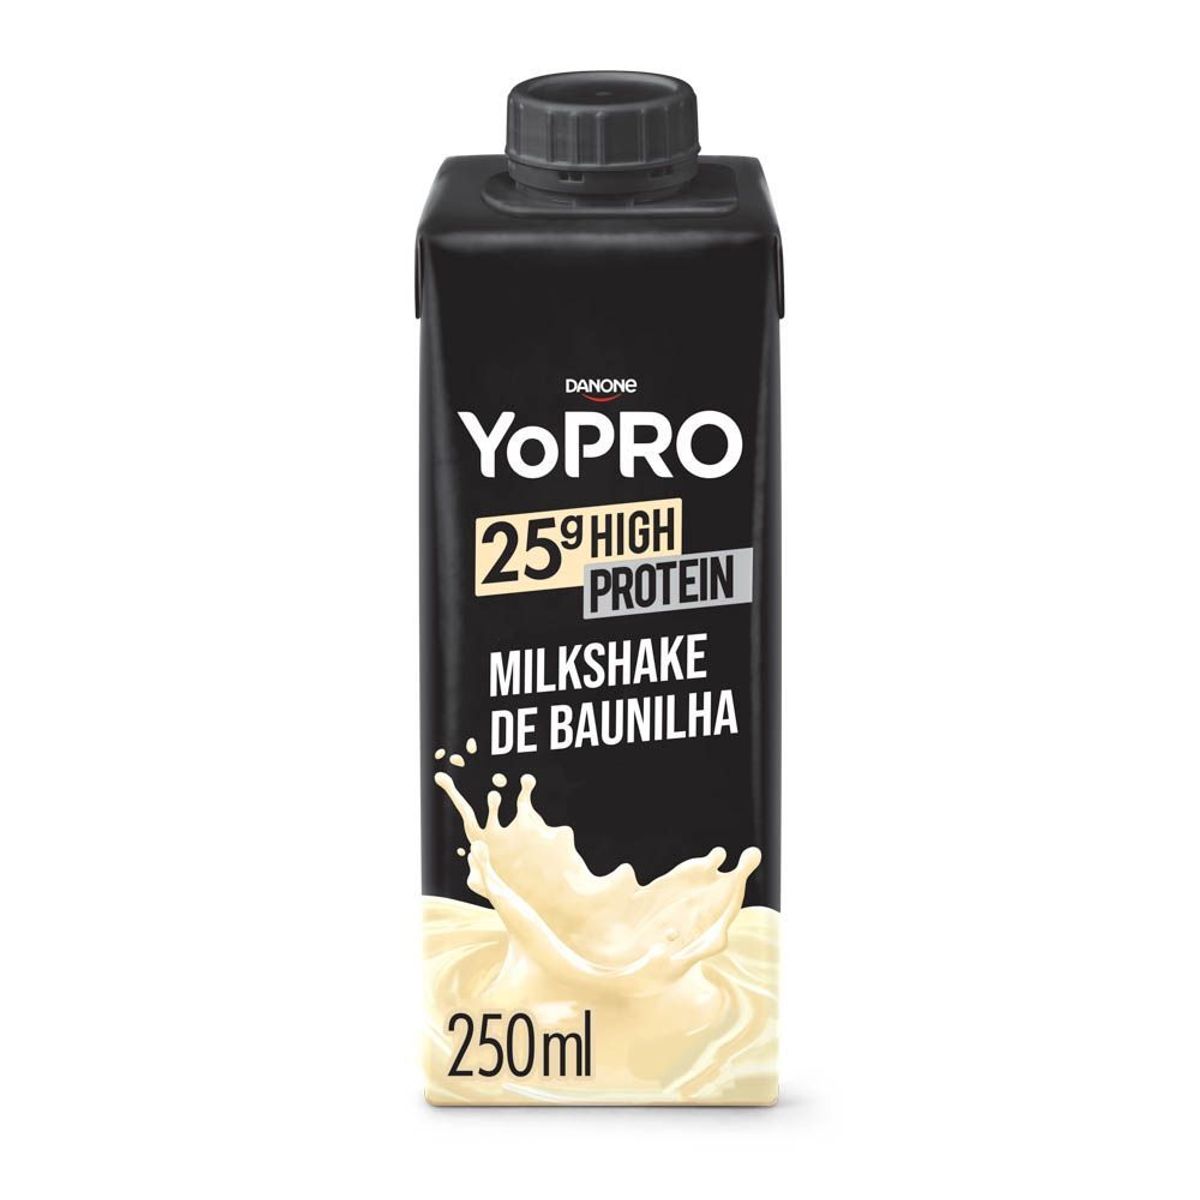 Bebida Láctea Yopro Milkshake de Baunilha 25g High Protein 250ml